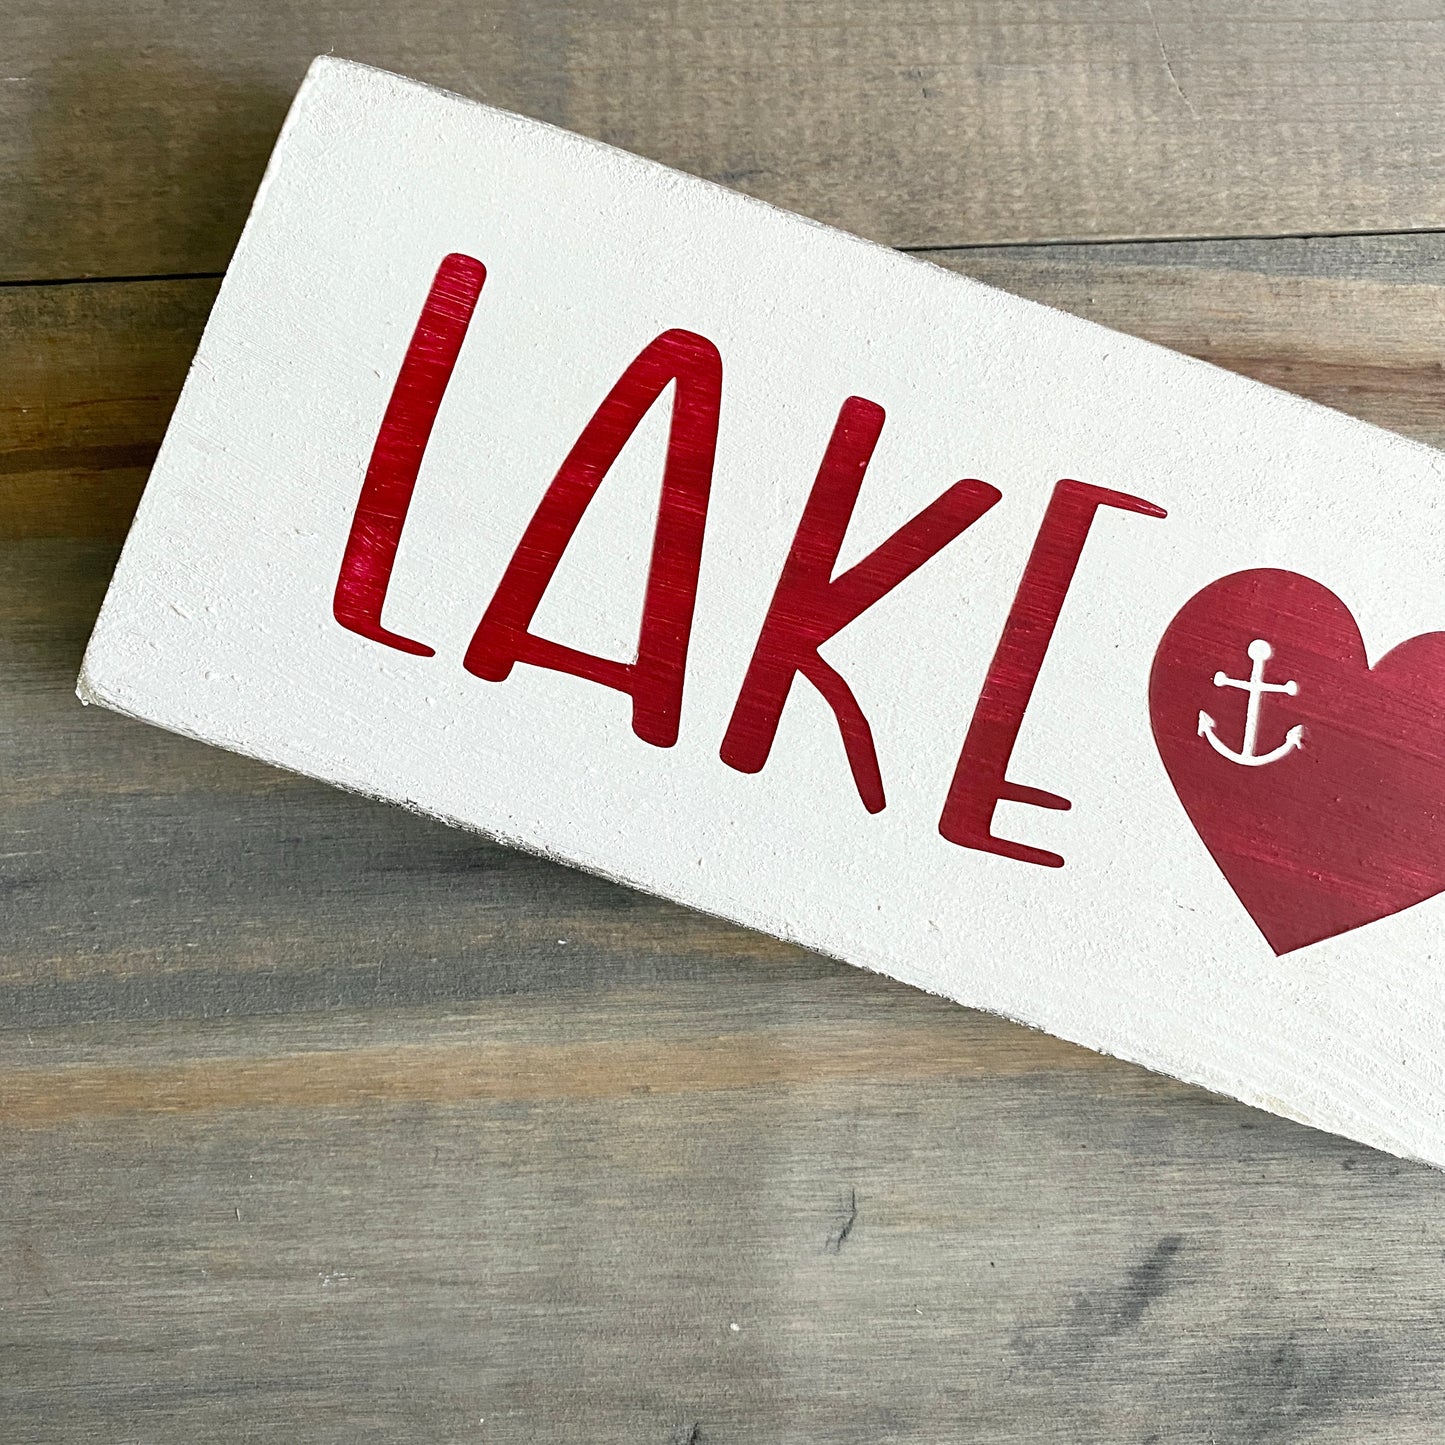 Lake heart sign